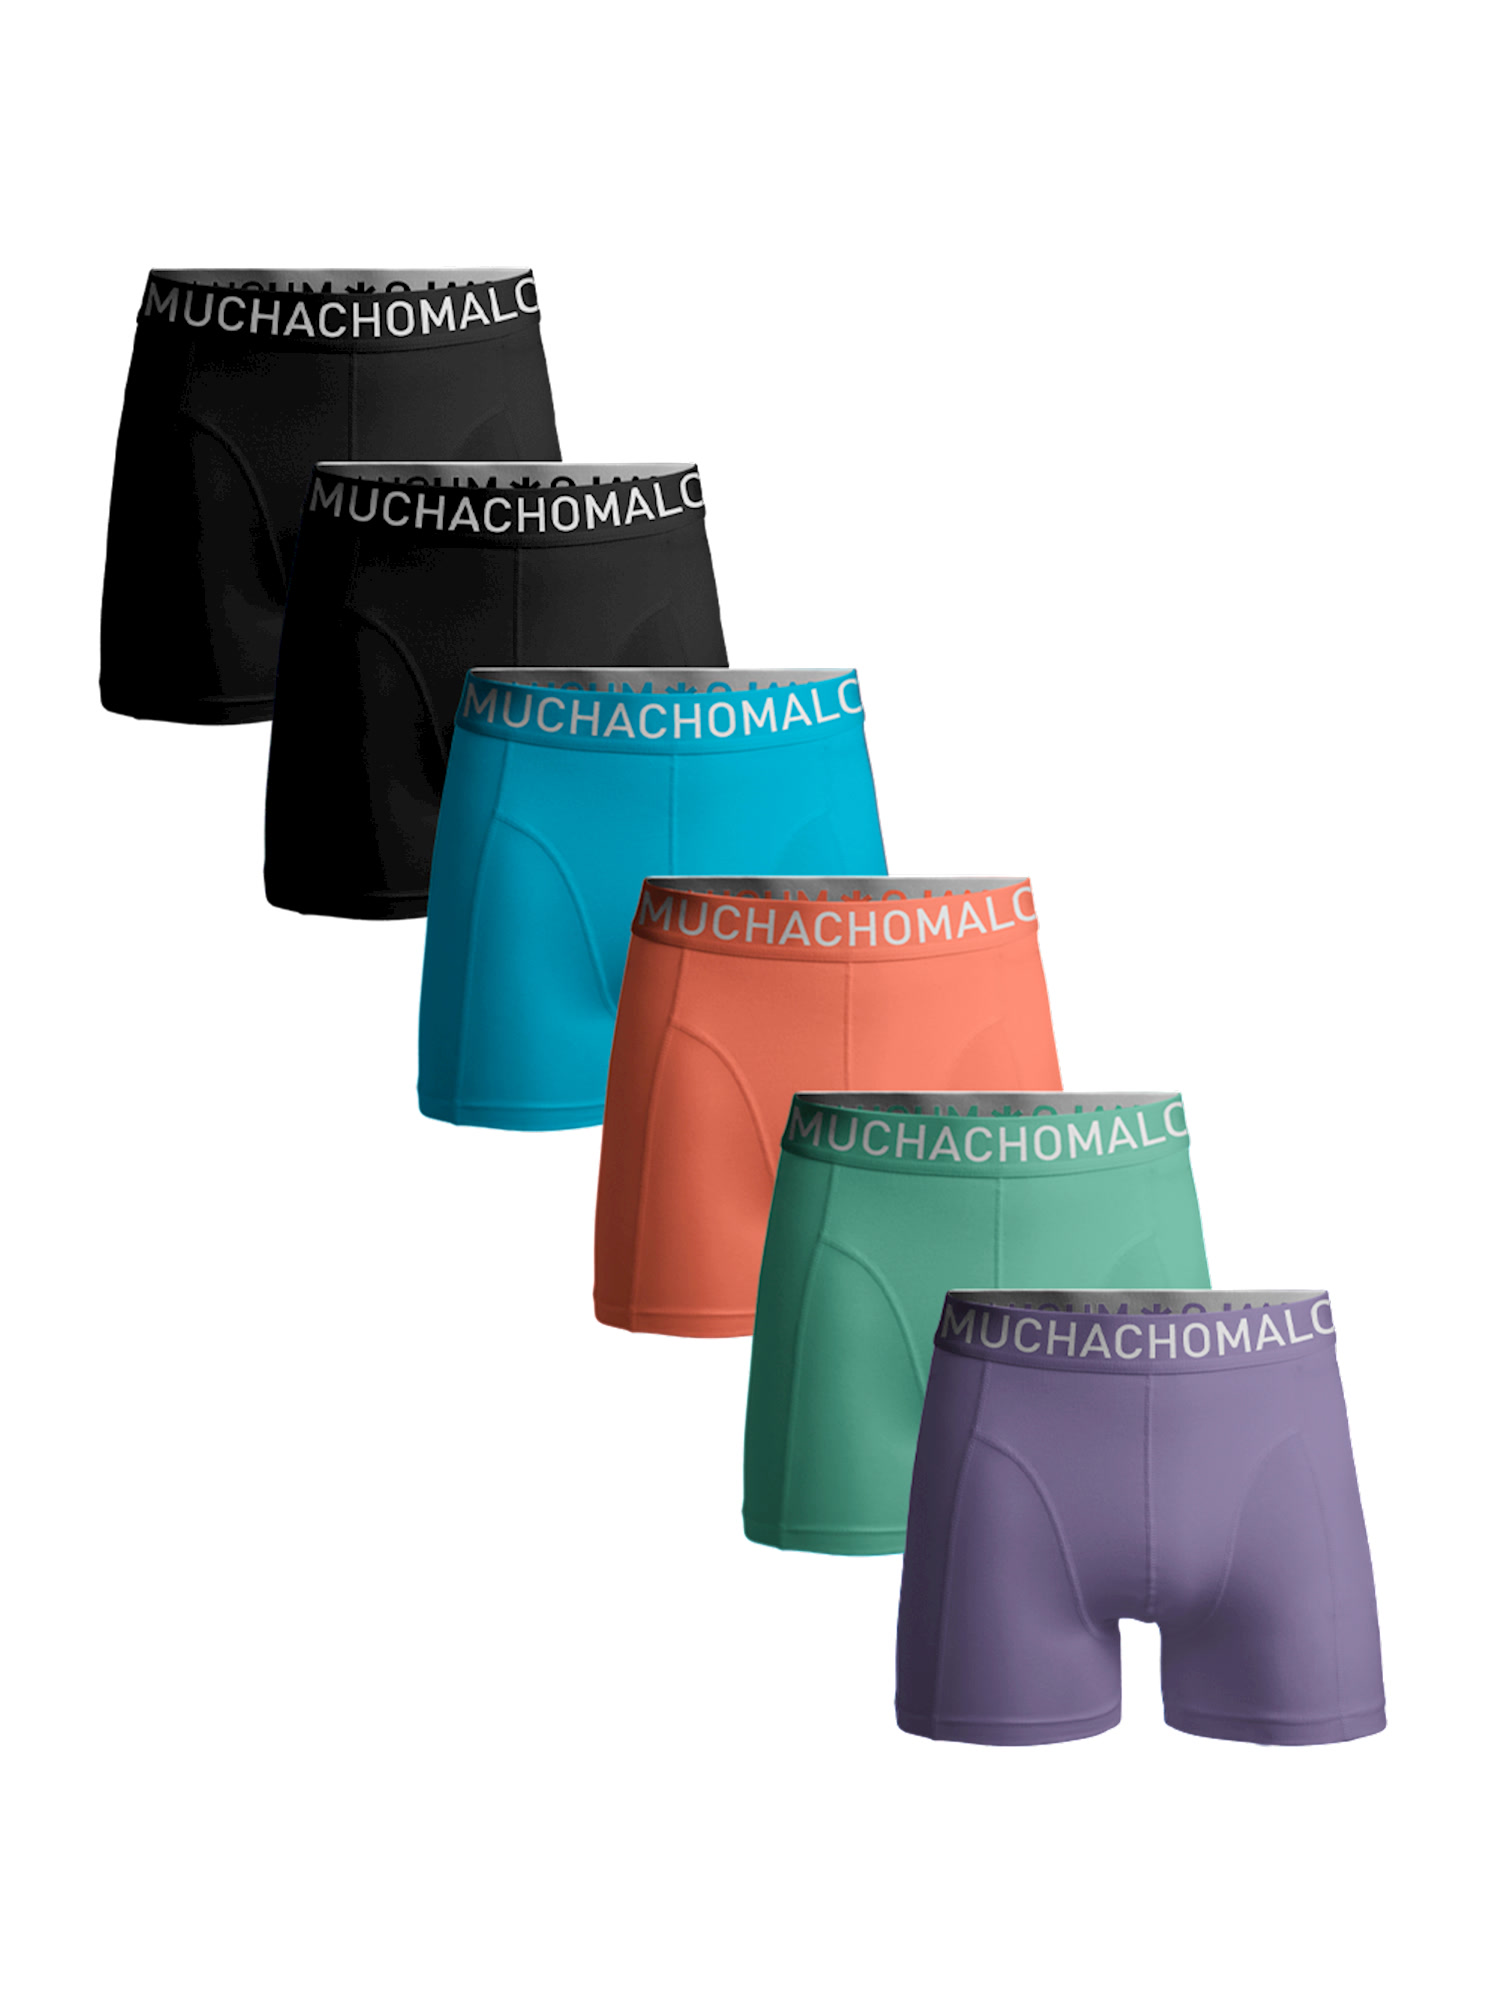 Боксеры Muchachomalo 6er-Set: Boxershorts, цвет Black/Black/Blue/Pink/Green/Purple